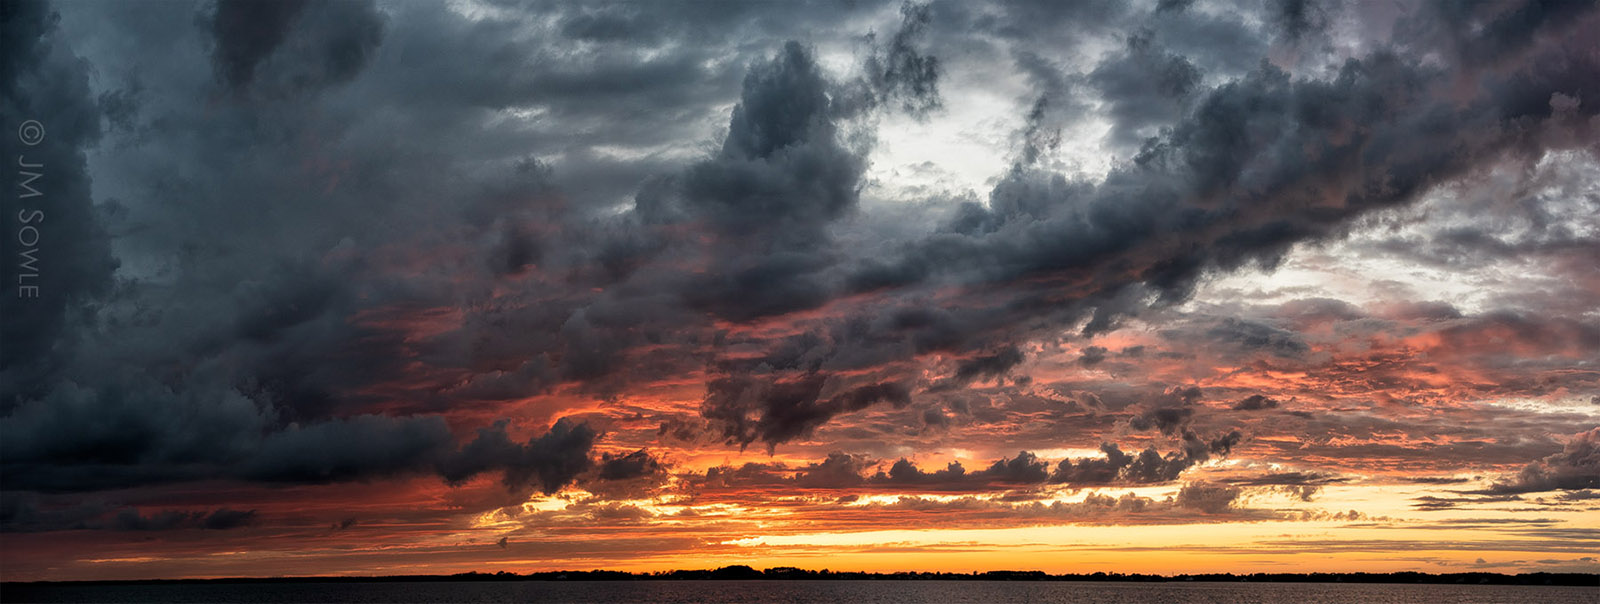 _JIM0199-0204-Pano_1600.jpg - A six-shot pano showing some sunset drama over Chincoteague Bay.